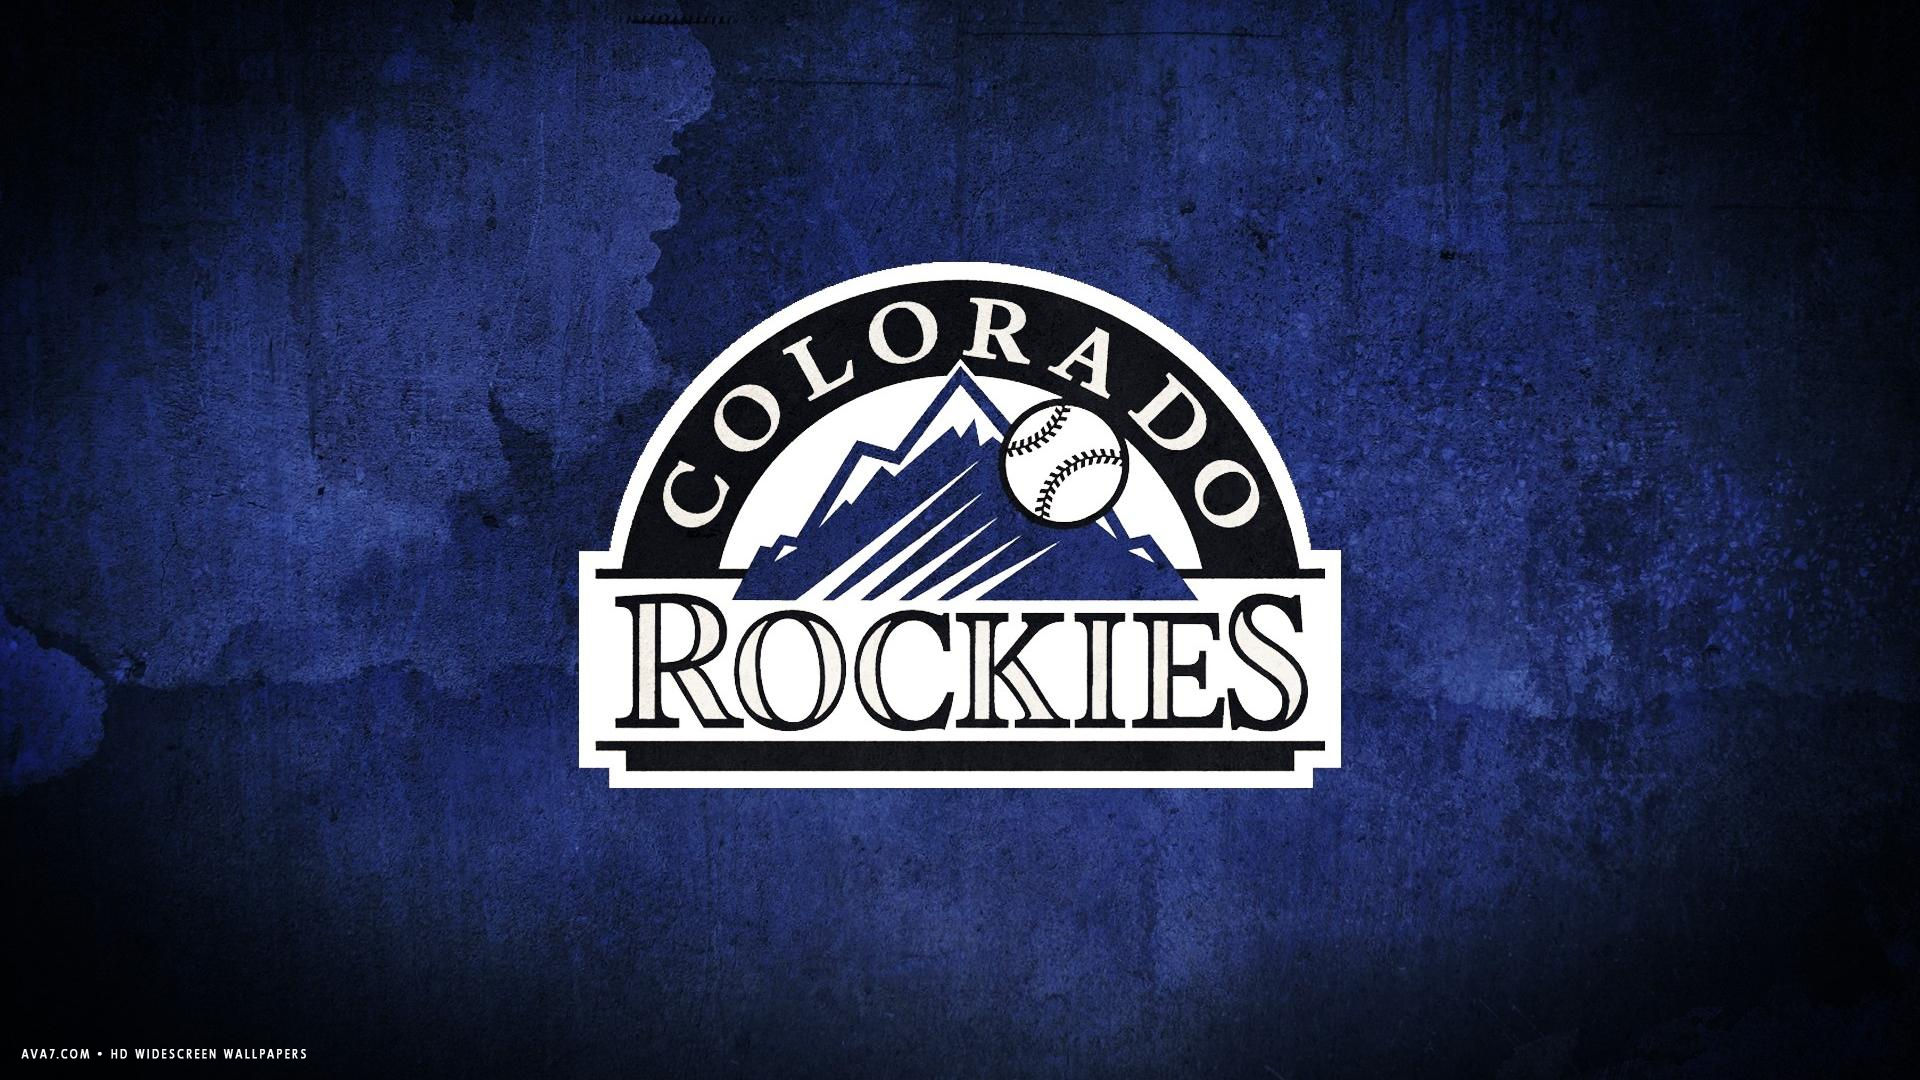 colorado rockies mlb baseball team hd widescreen wallpaper